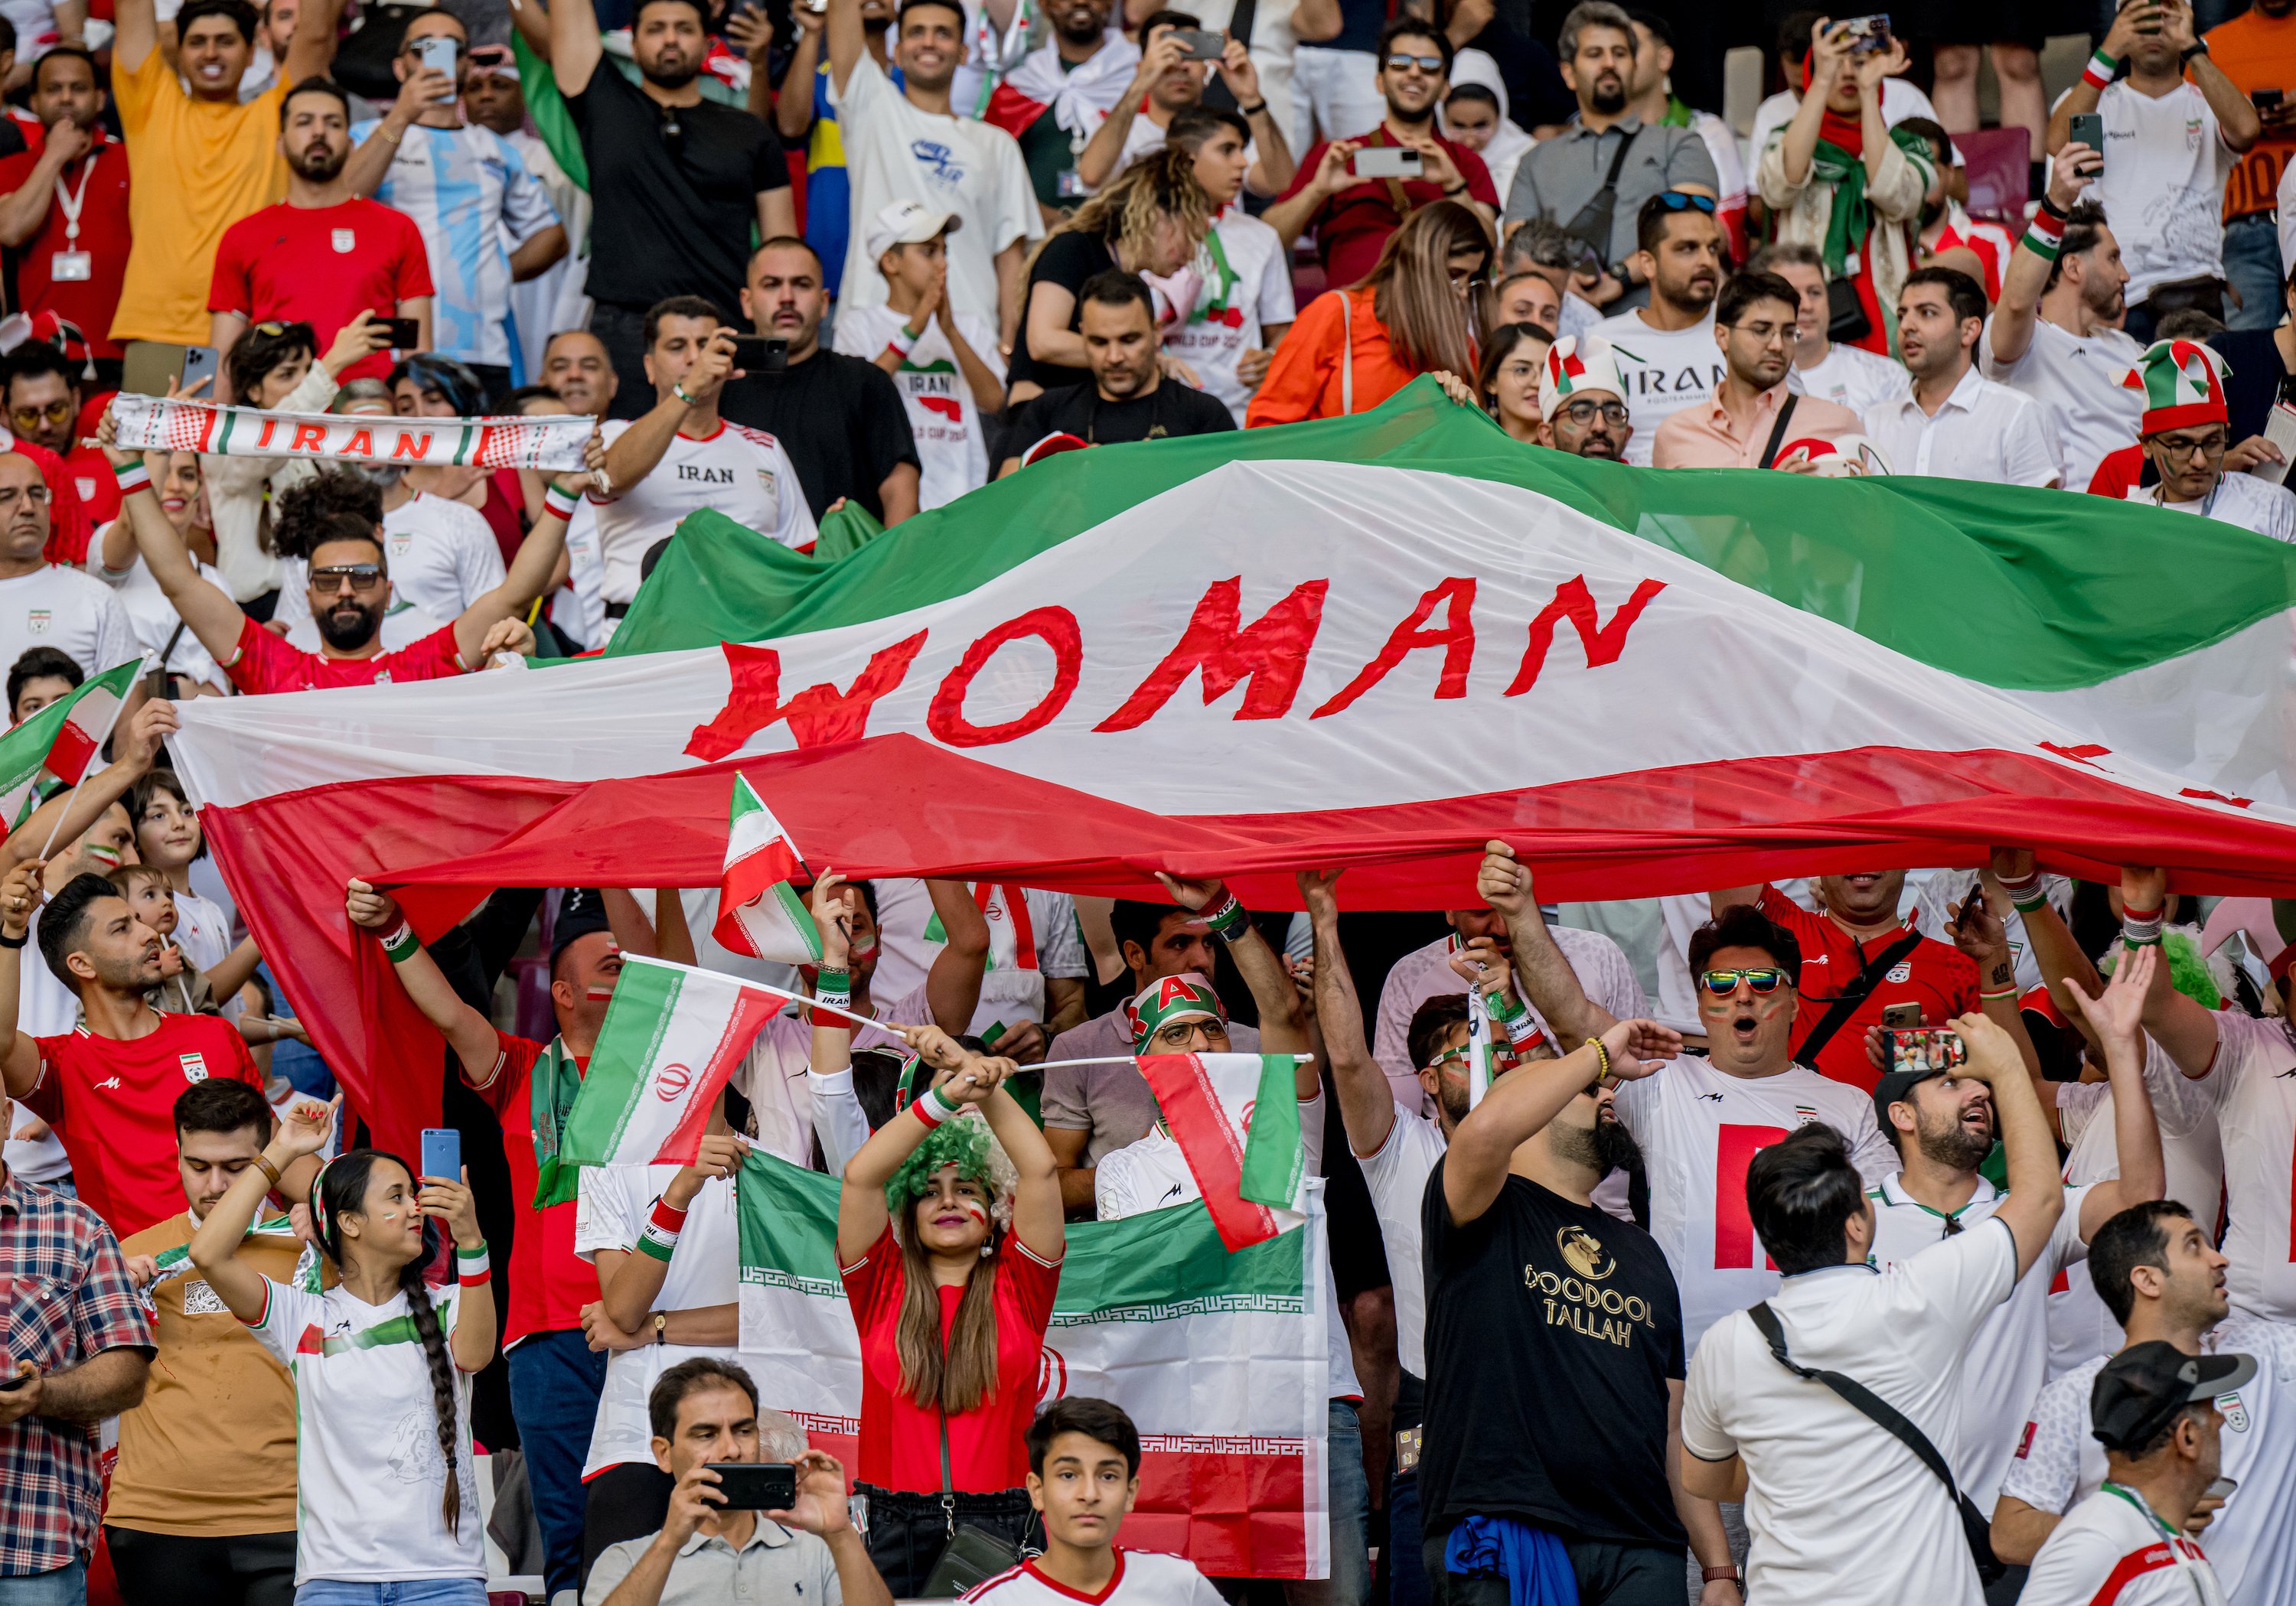 O futebol pouco interessou entre ingleses e iranianos